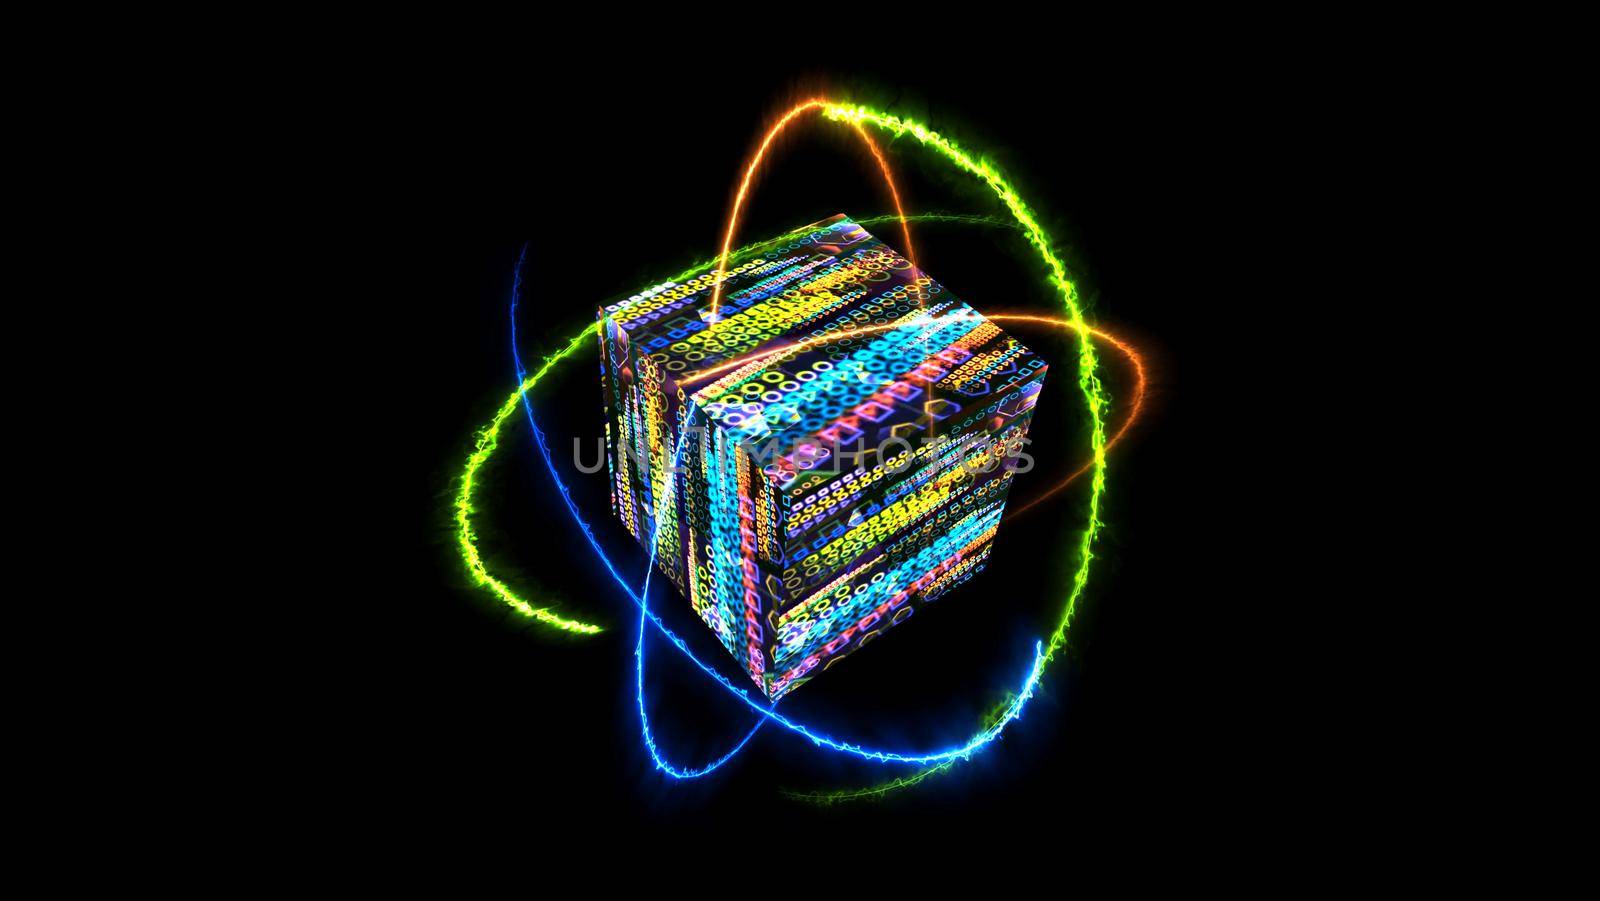 Quantum computer core abstract futuristic technology digital layer dimension by Darkfox